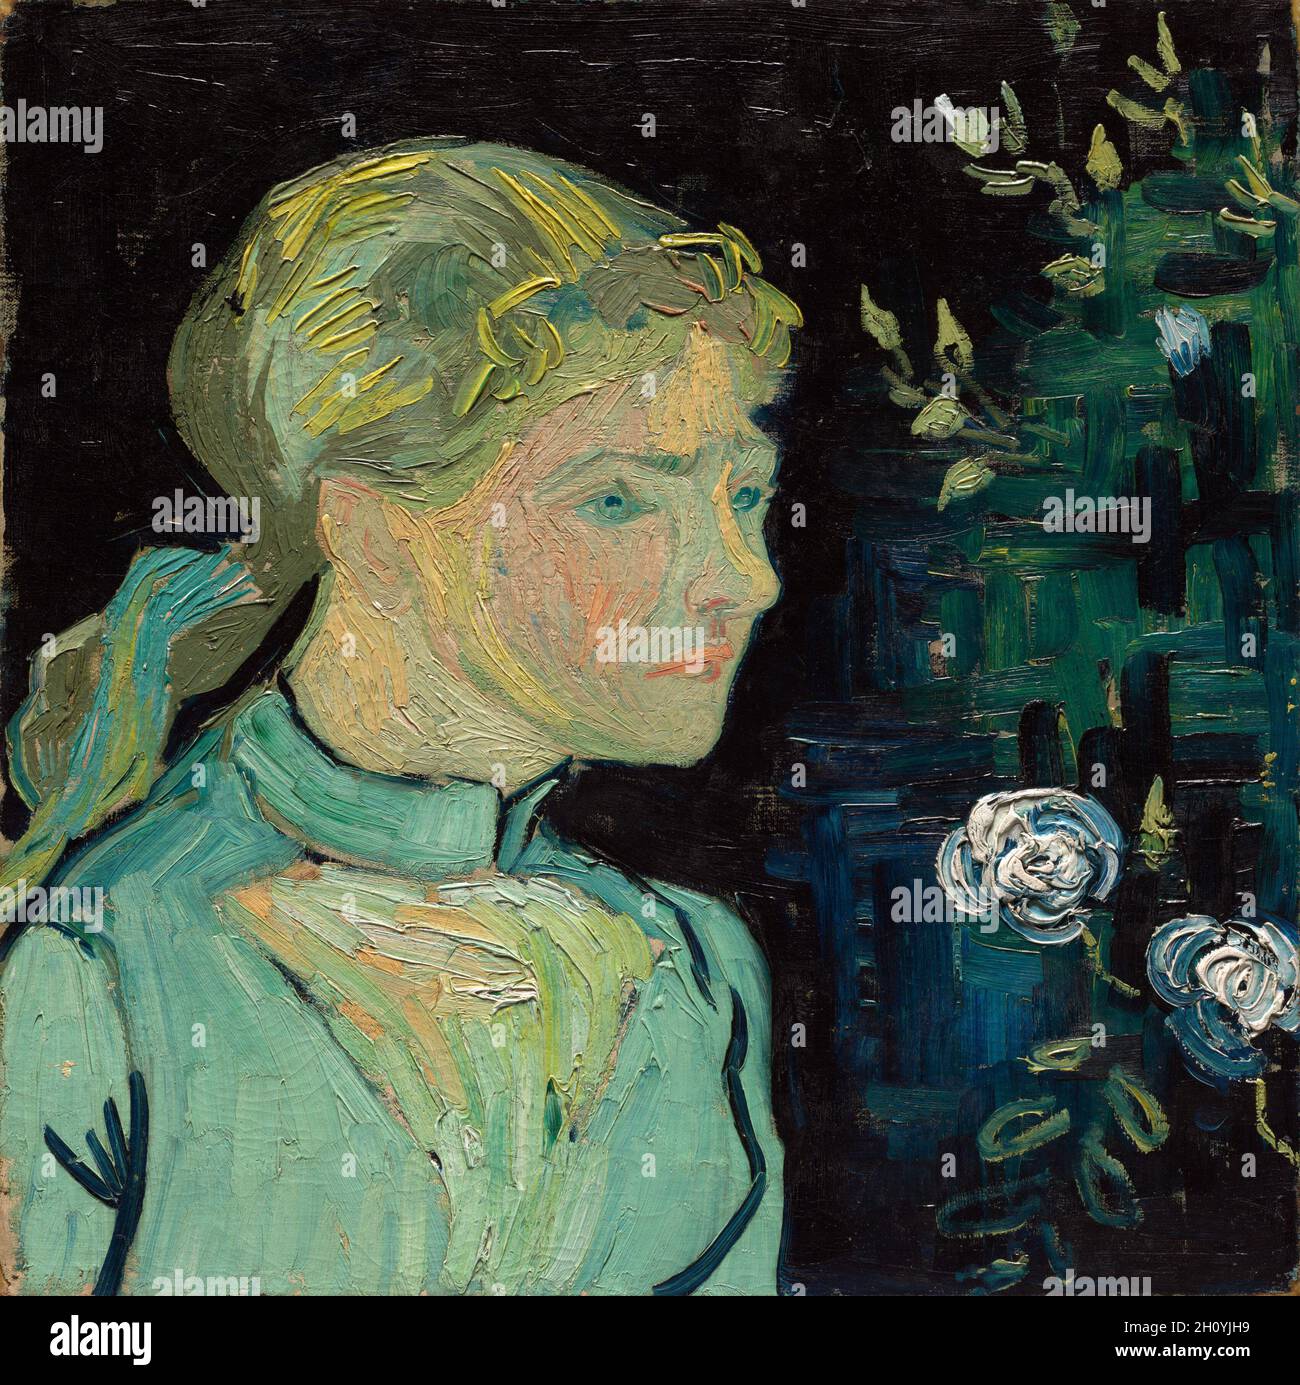 Jueves, La Oreja de Van Gogh Wiki